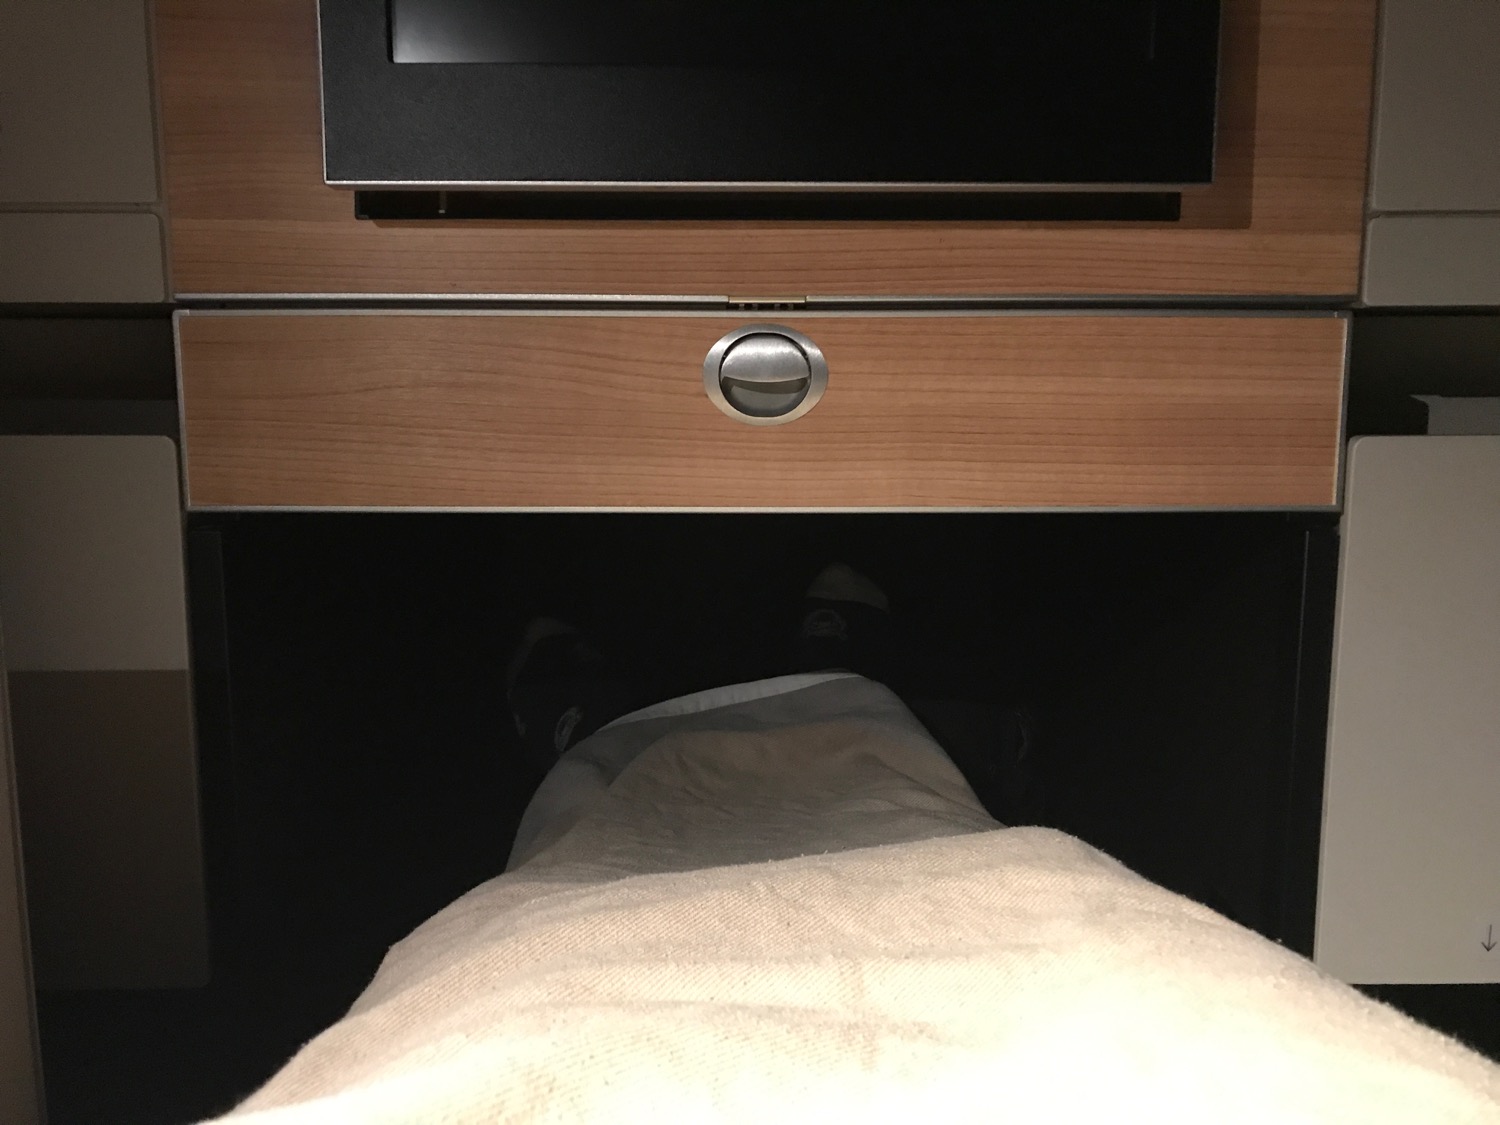 a person's leg under a tv